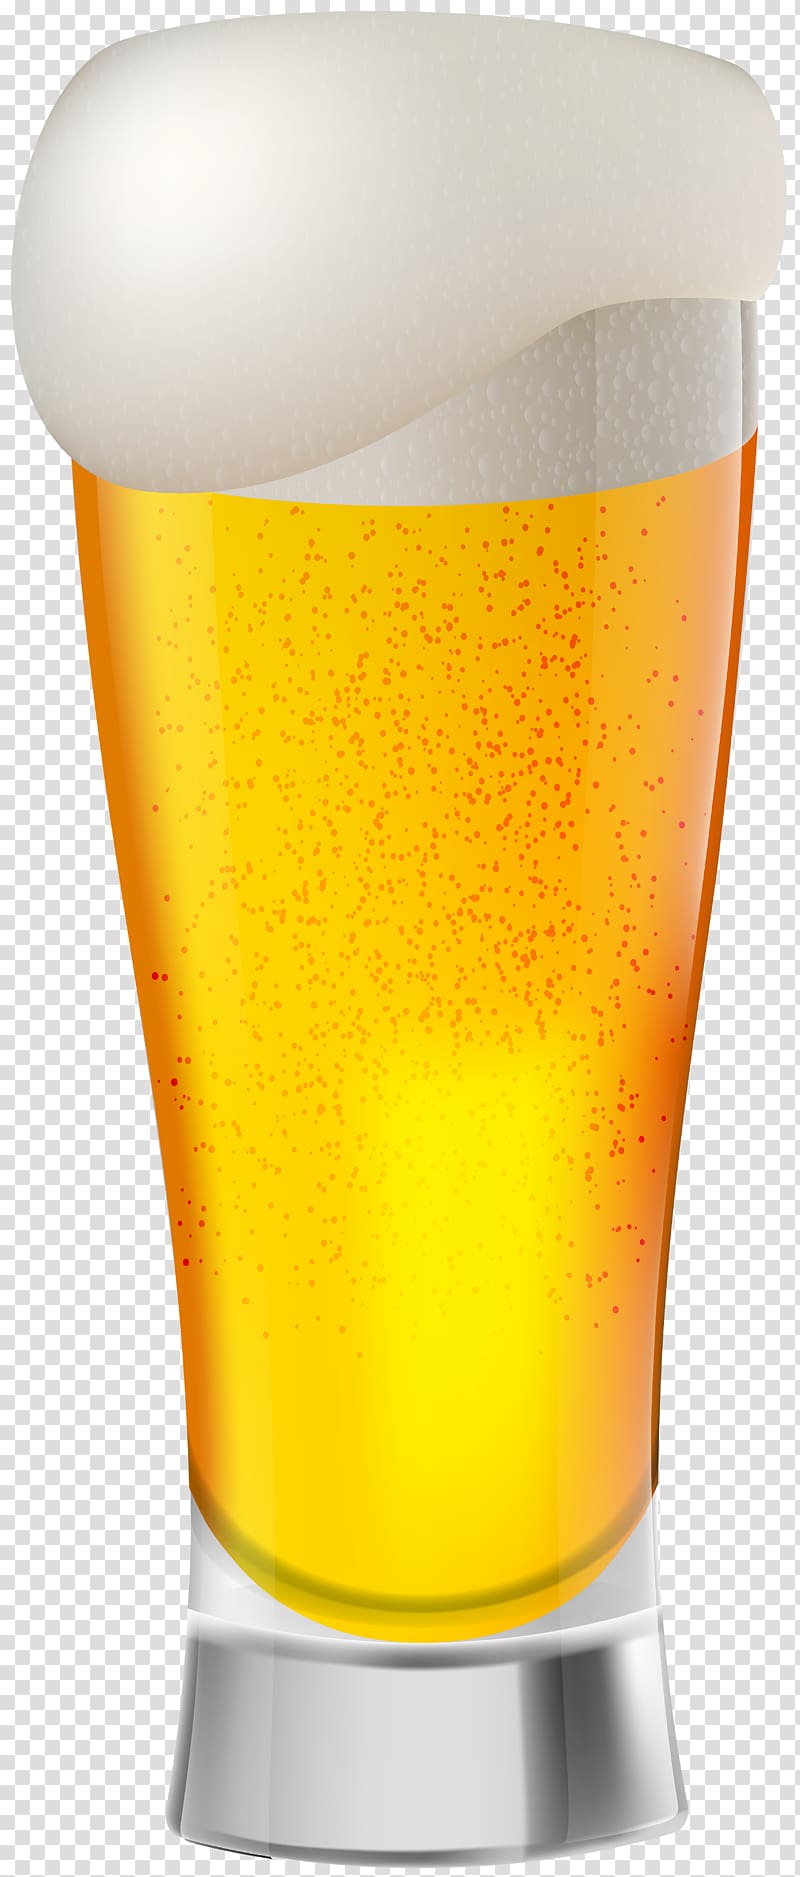 pint glass of beer illustration, Beer Pint glass Orange drink United States of America, Beer transparent background PNG clipart